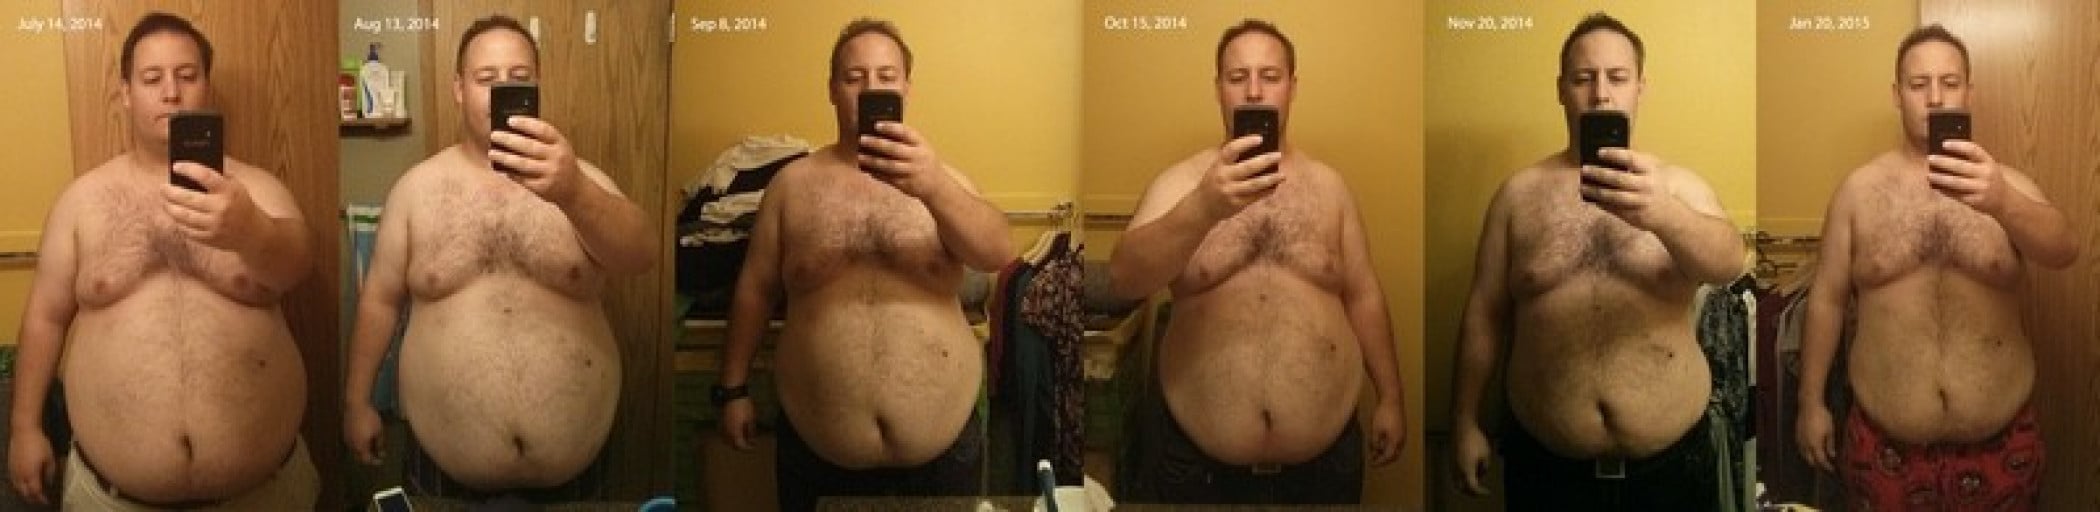 5 feet 9 Male Progress Pics of 60 lbs Weight Loss 310 lbs to 250 lbs